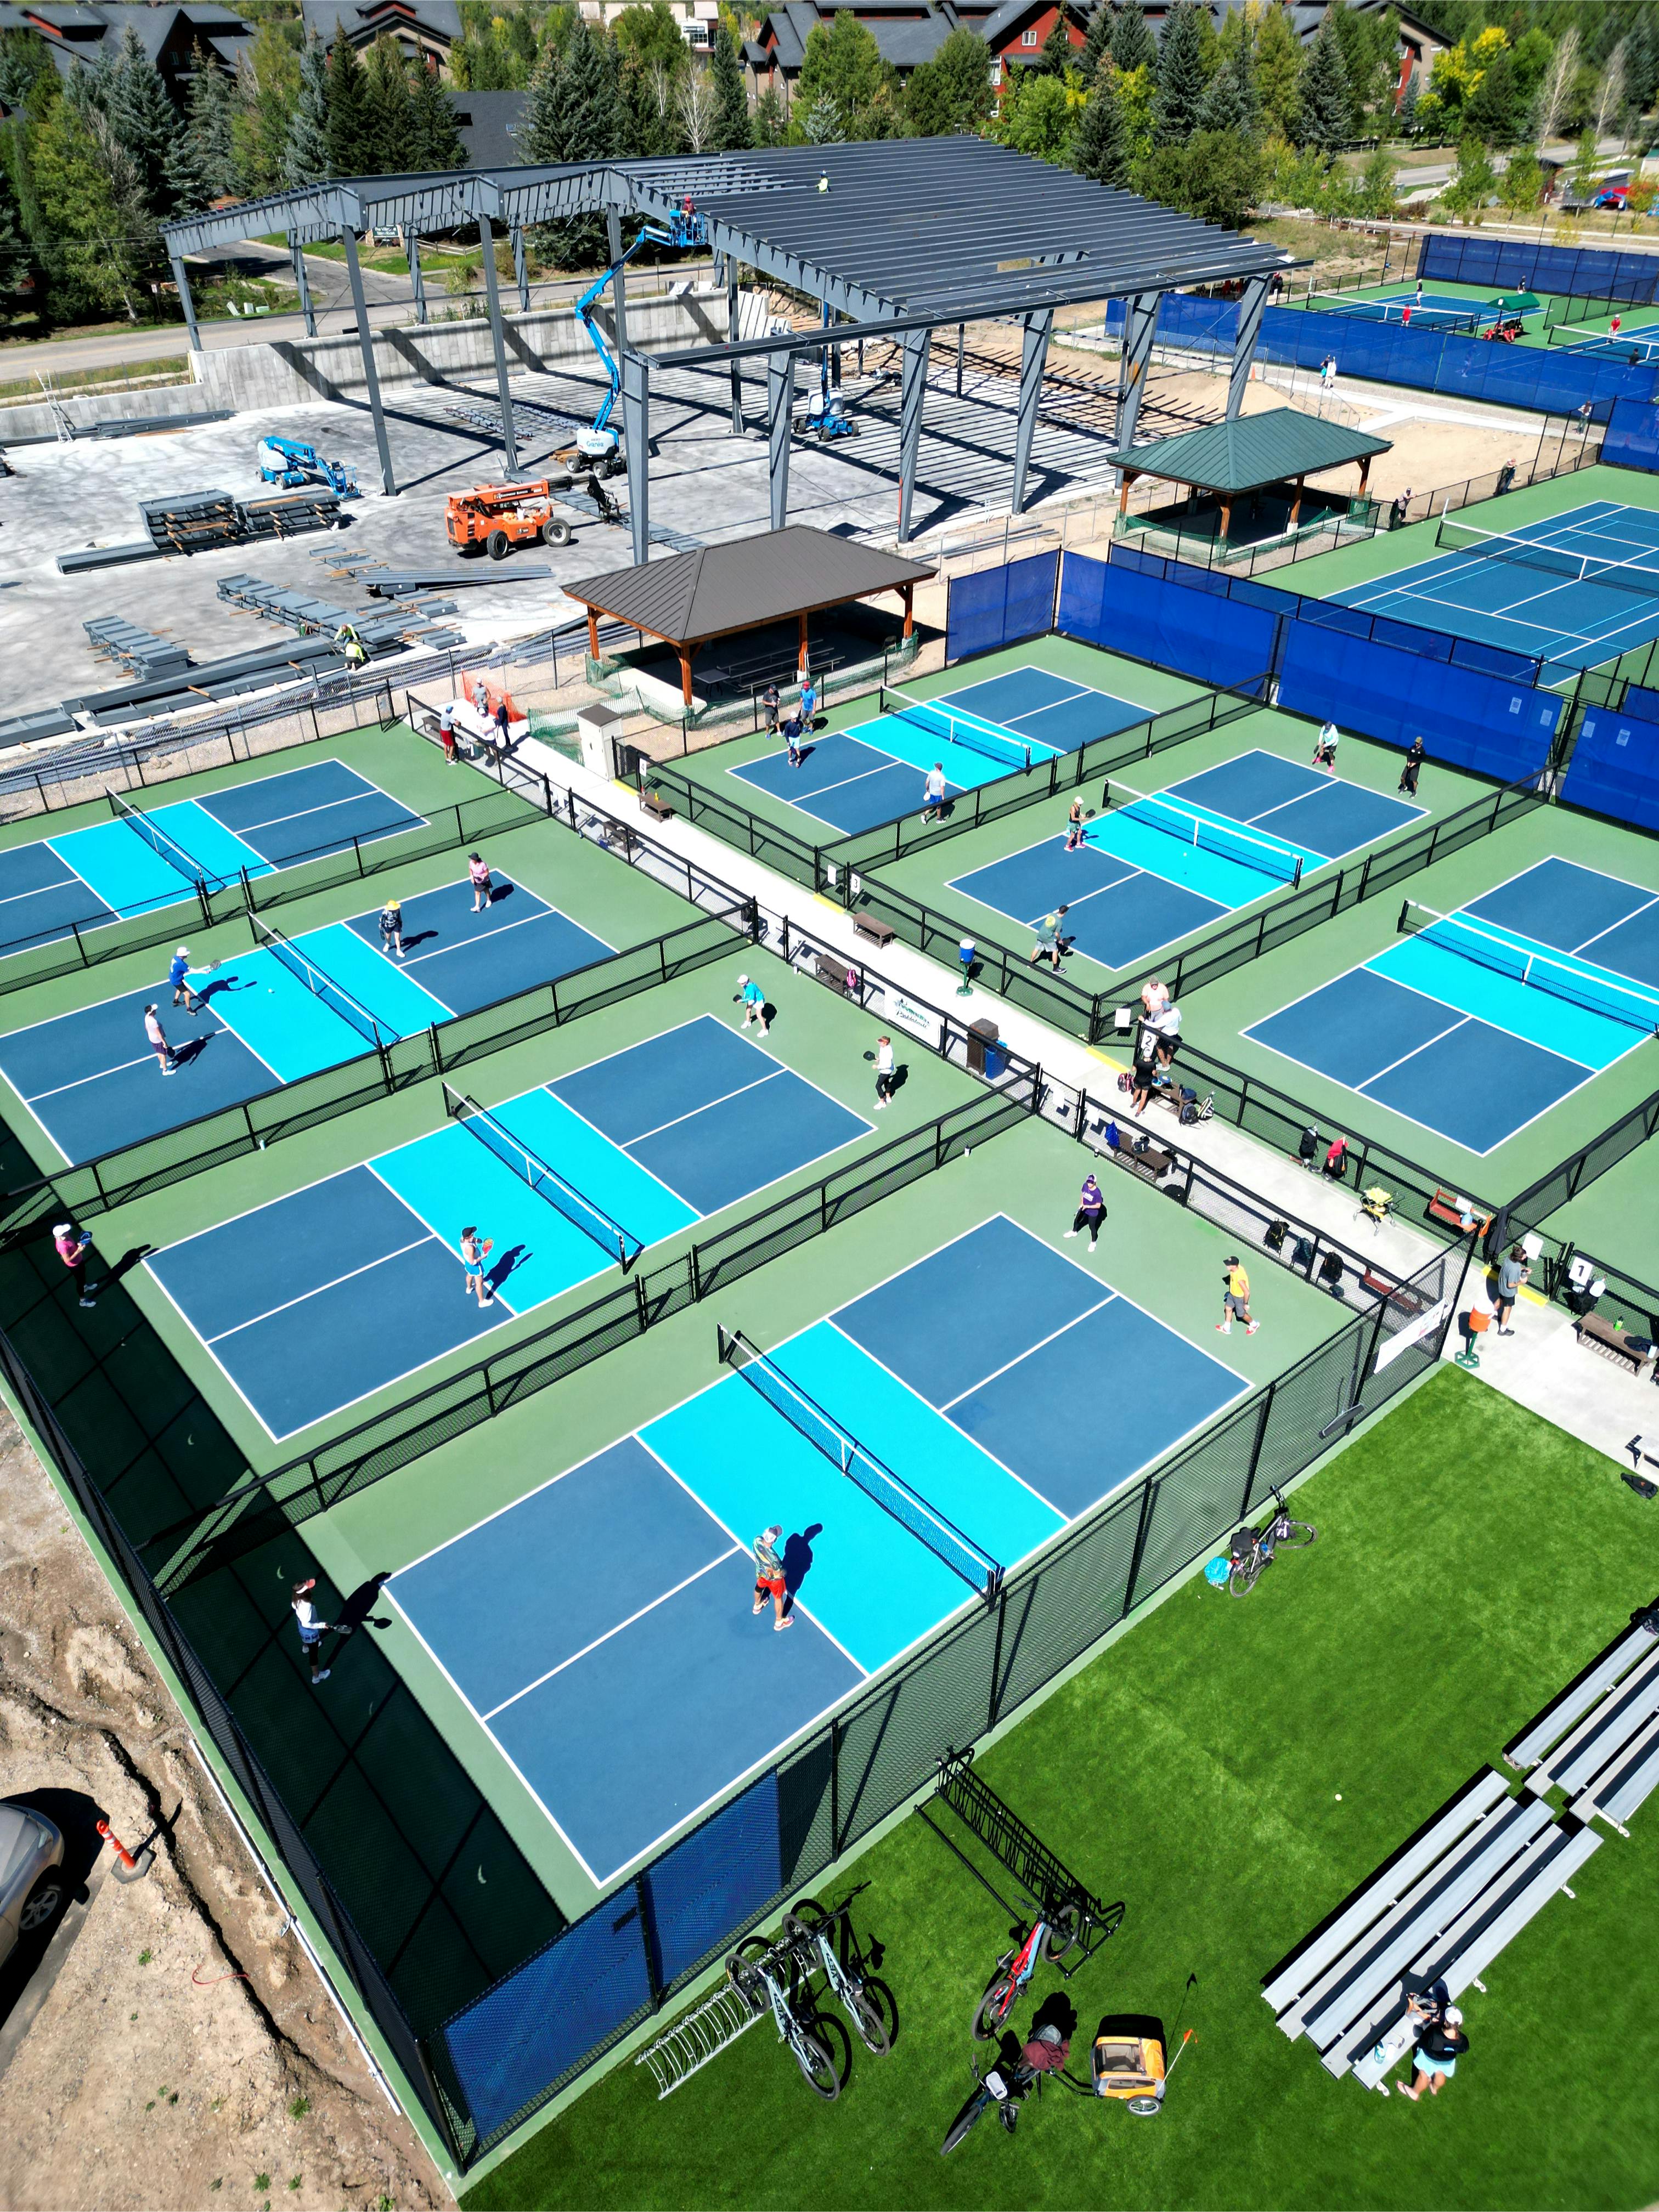 Image 3 of 8 of Steamboat Springs Tennis & Pickleball Center court